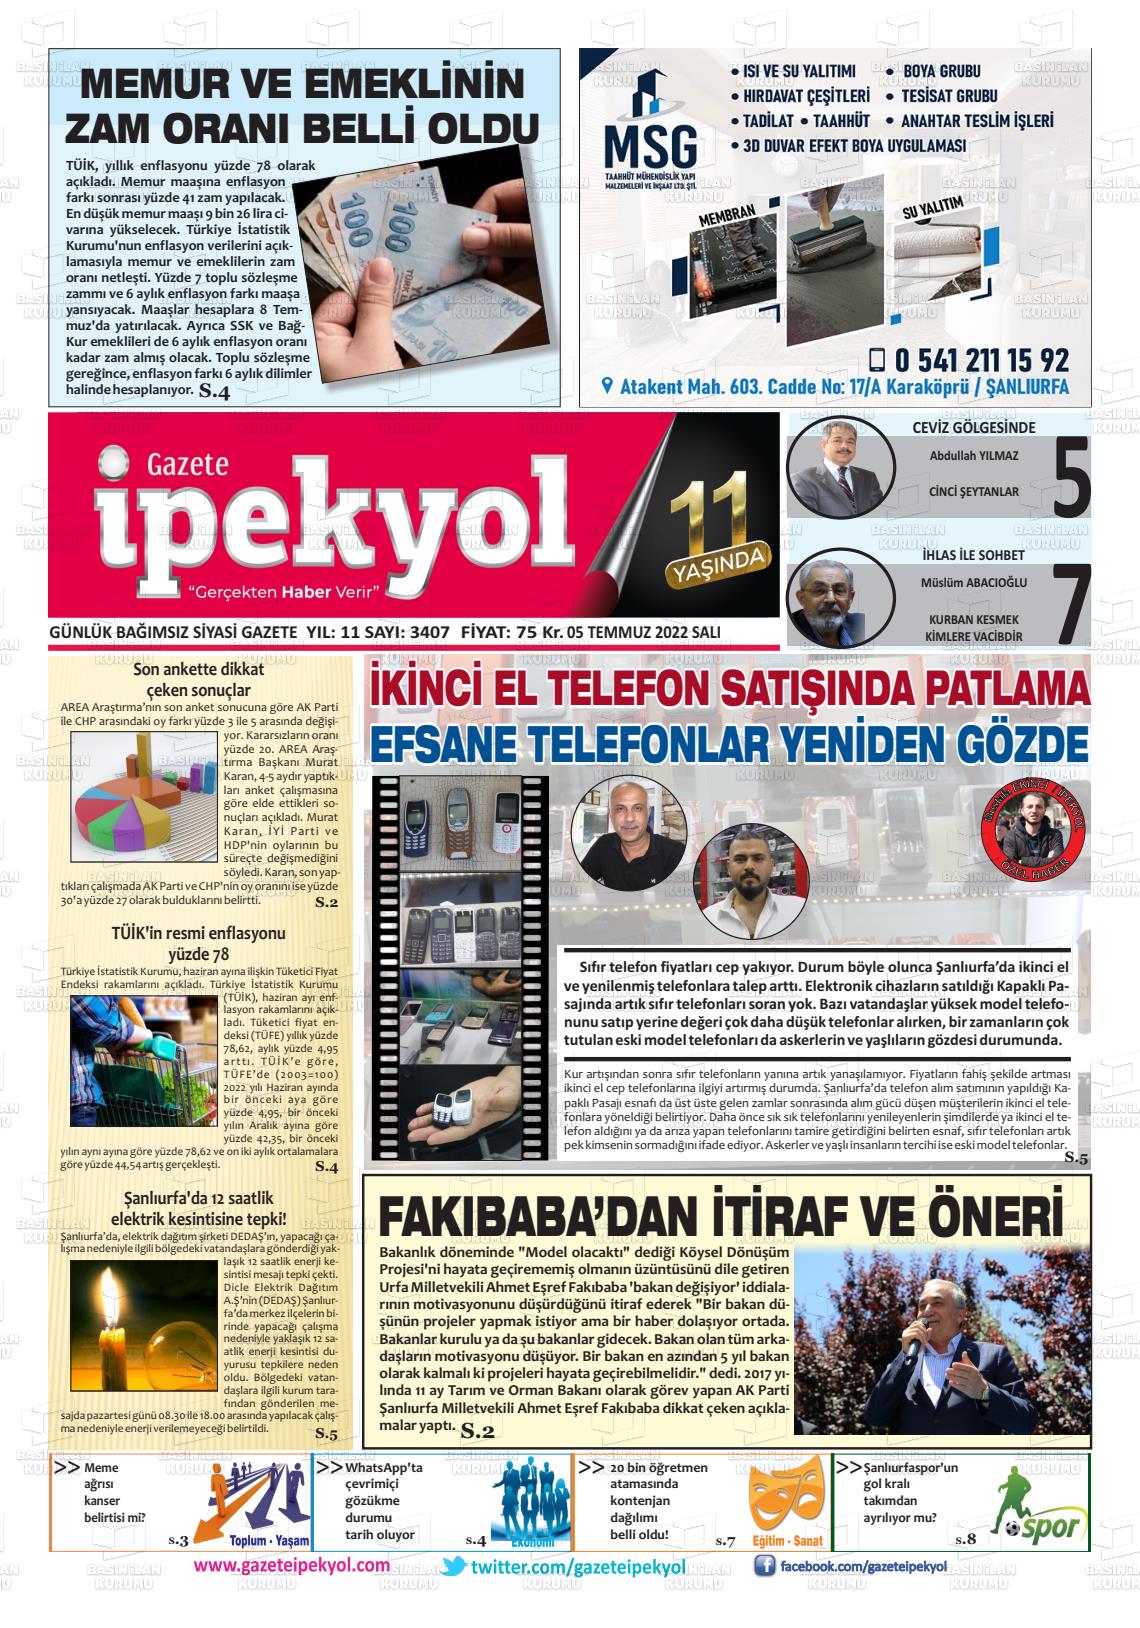 05 Temmuz 2022 Gazete İpekyol Gazete Manşeti